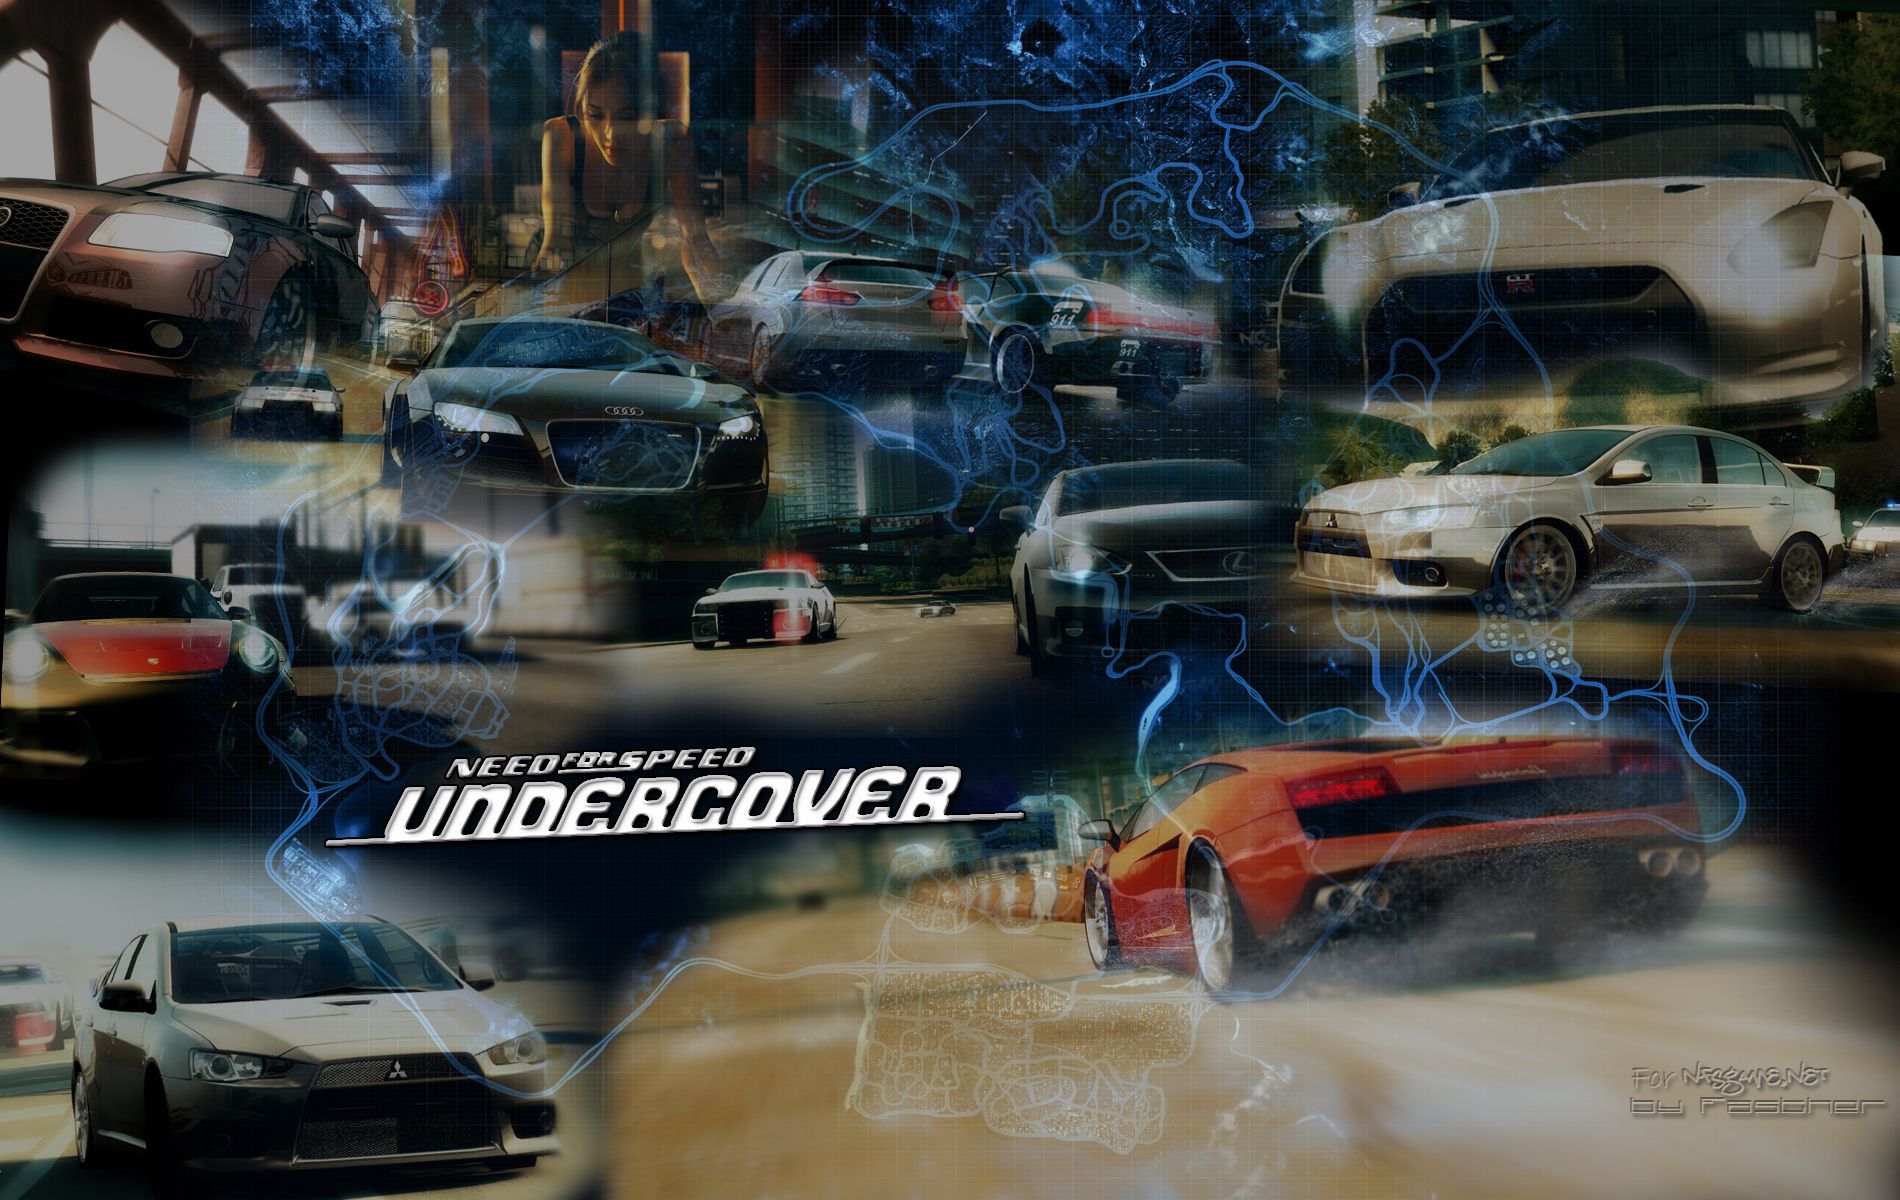 Undercover Cop Wallpaper. Need for Speed Undercover Wallpaper, Undercover Cop Wallpaper and K.C. Undercover Wallpaper